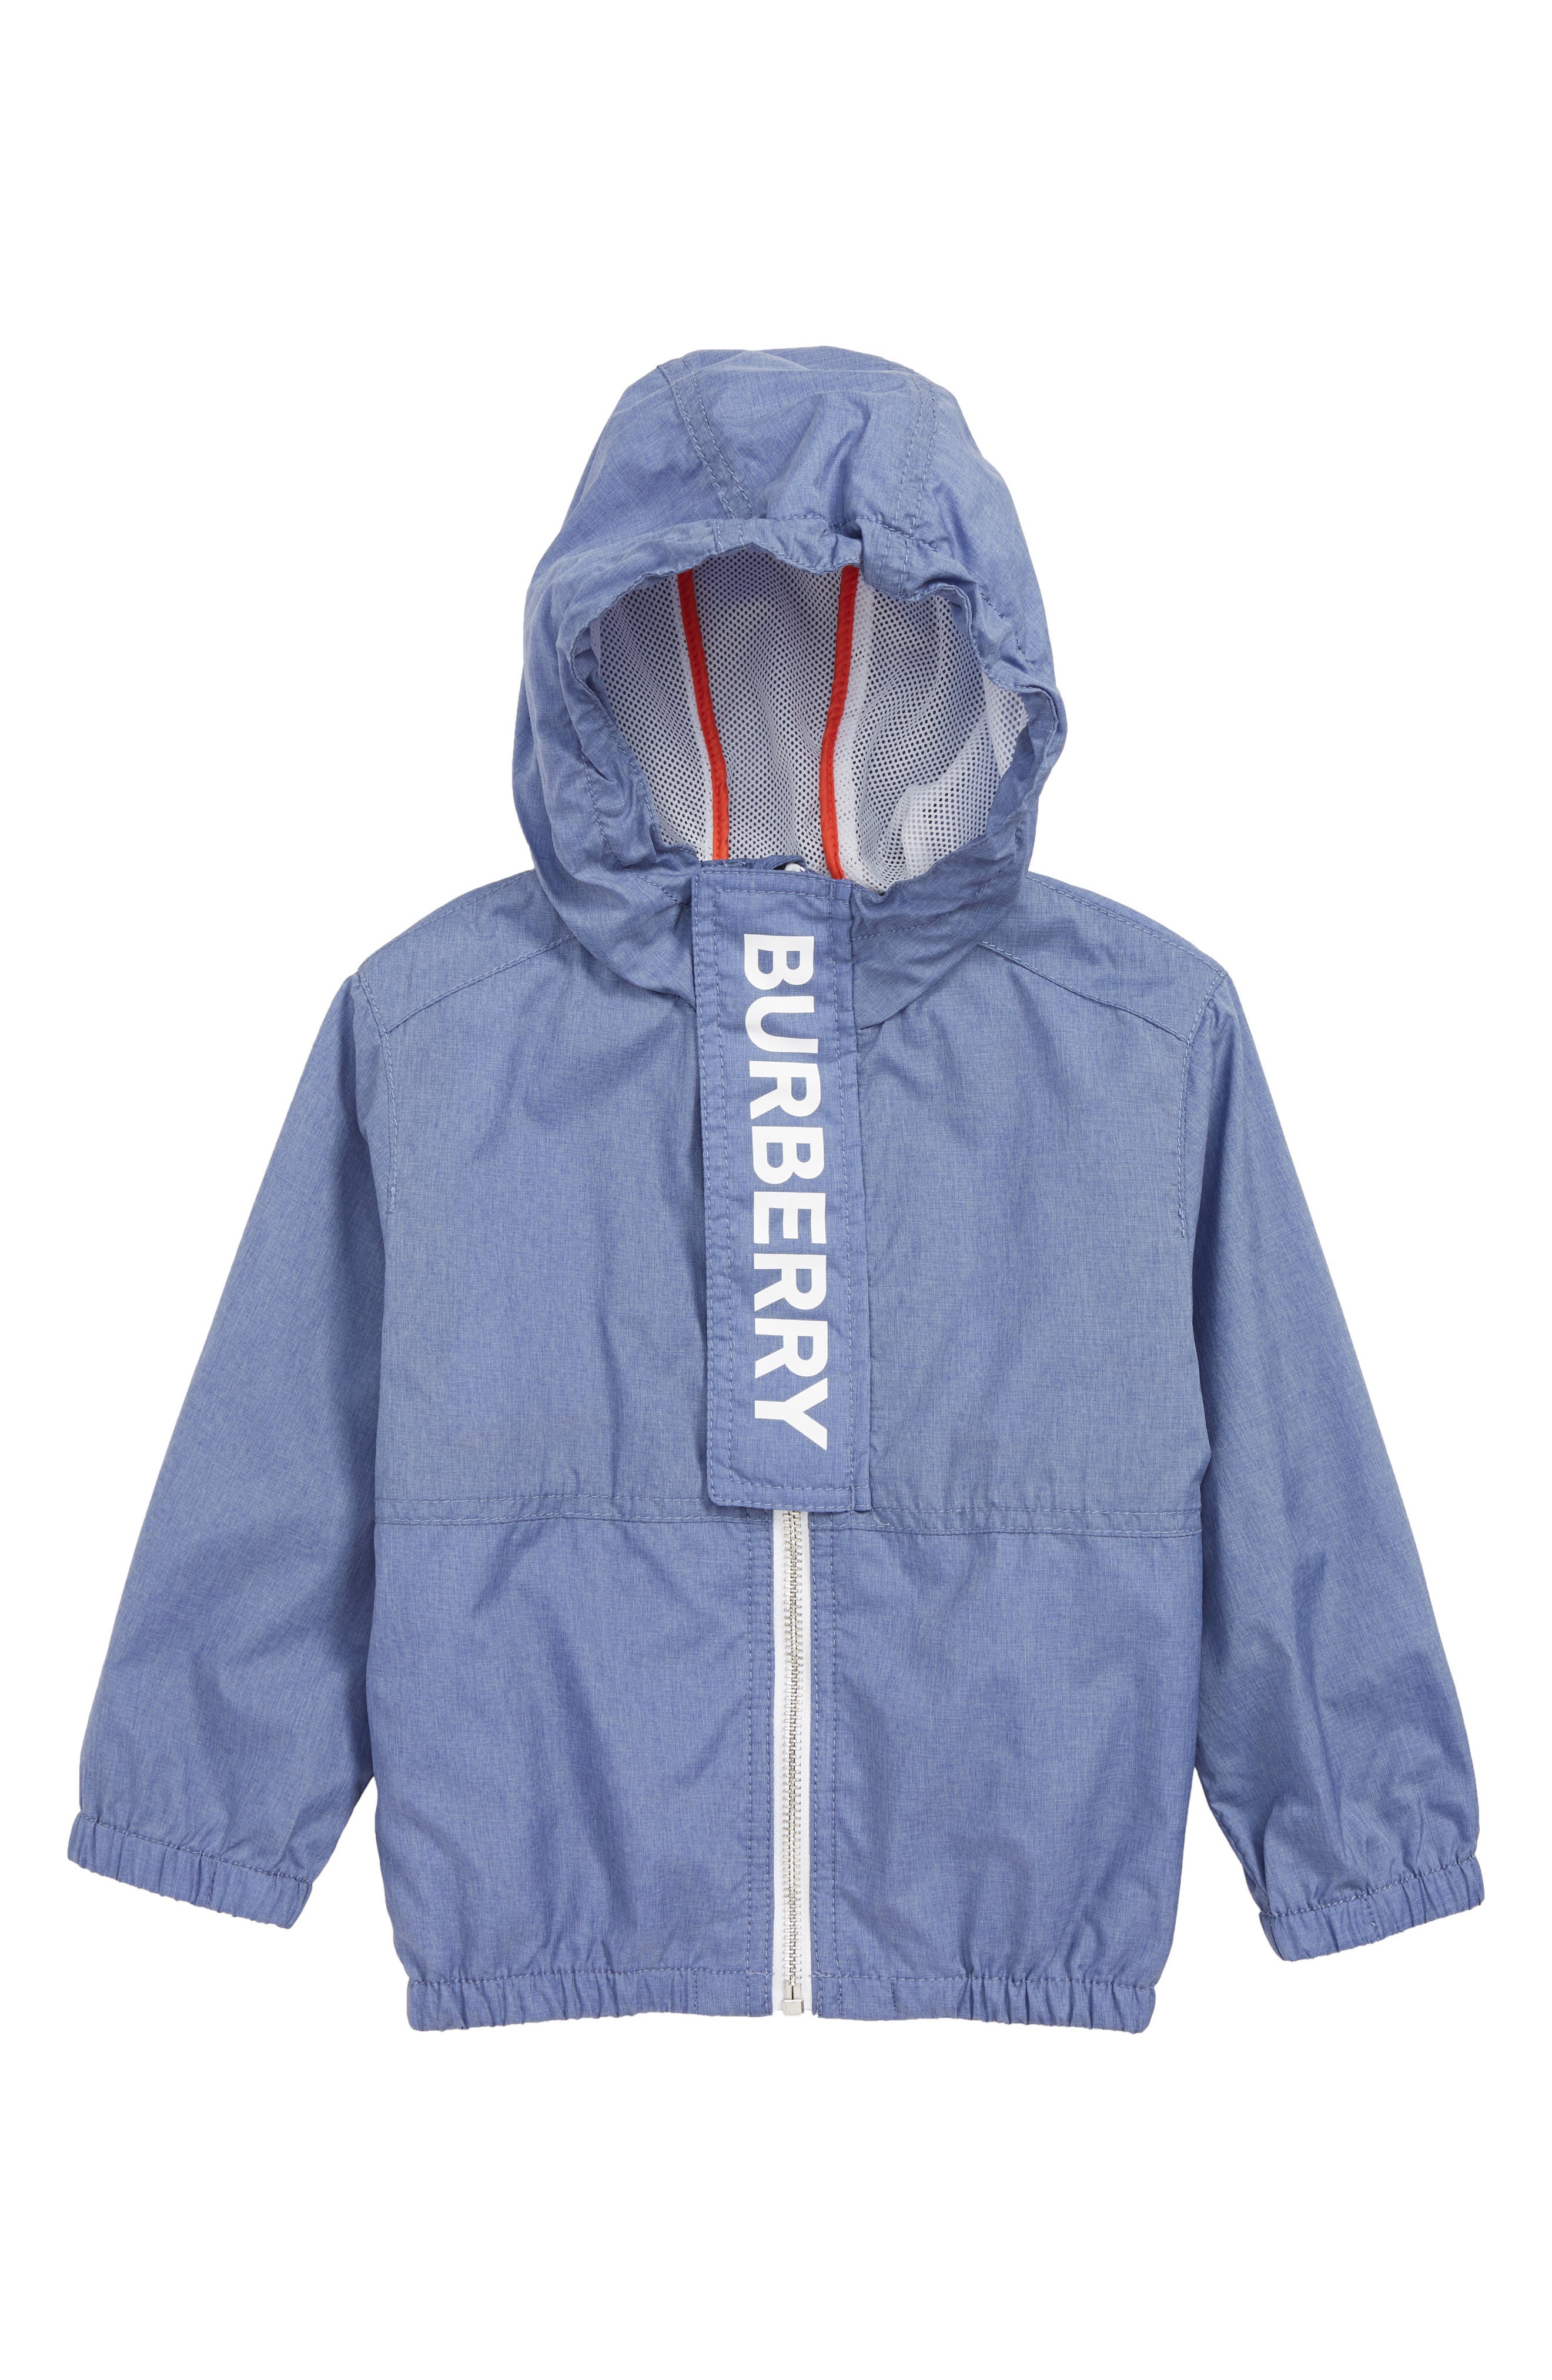 burberry jacket mens windbreaker